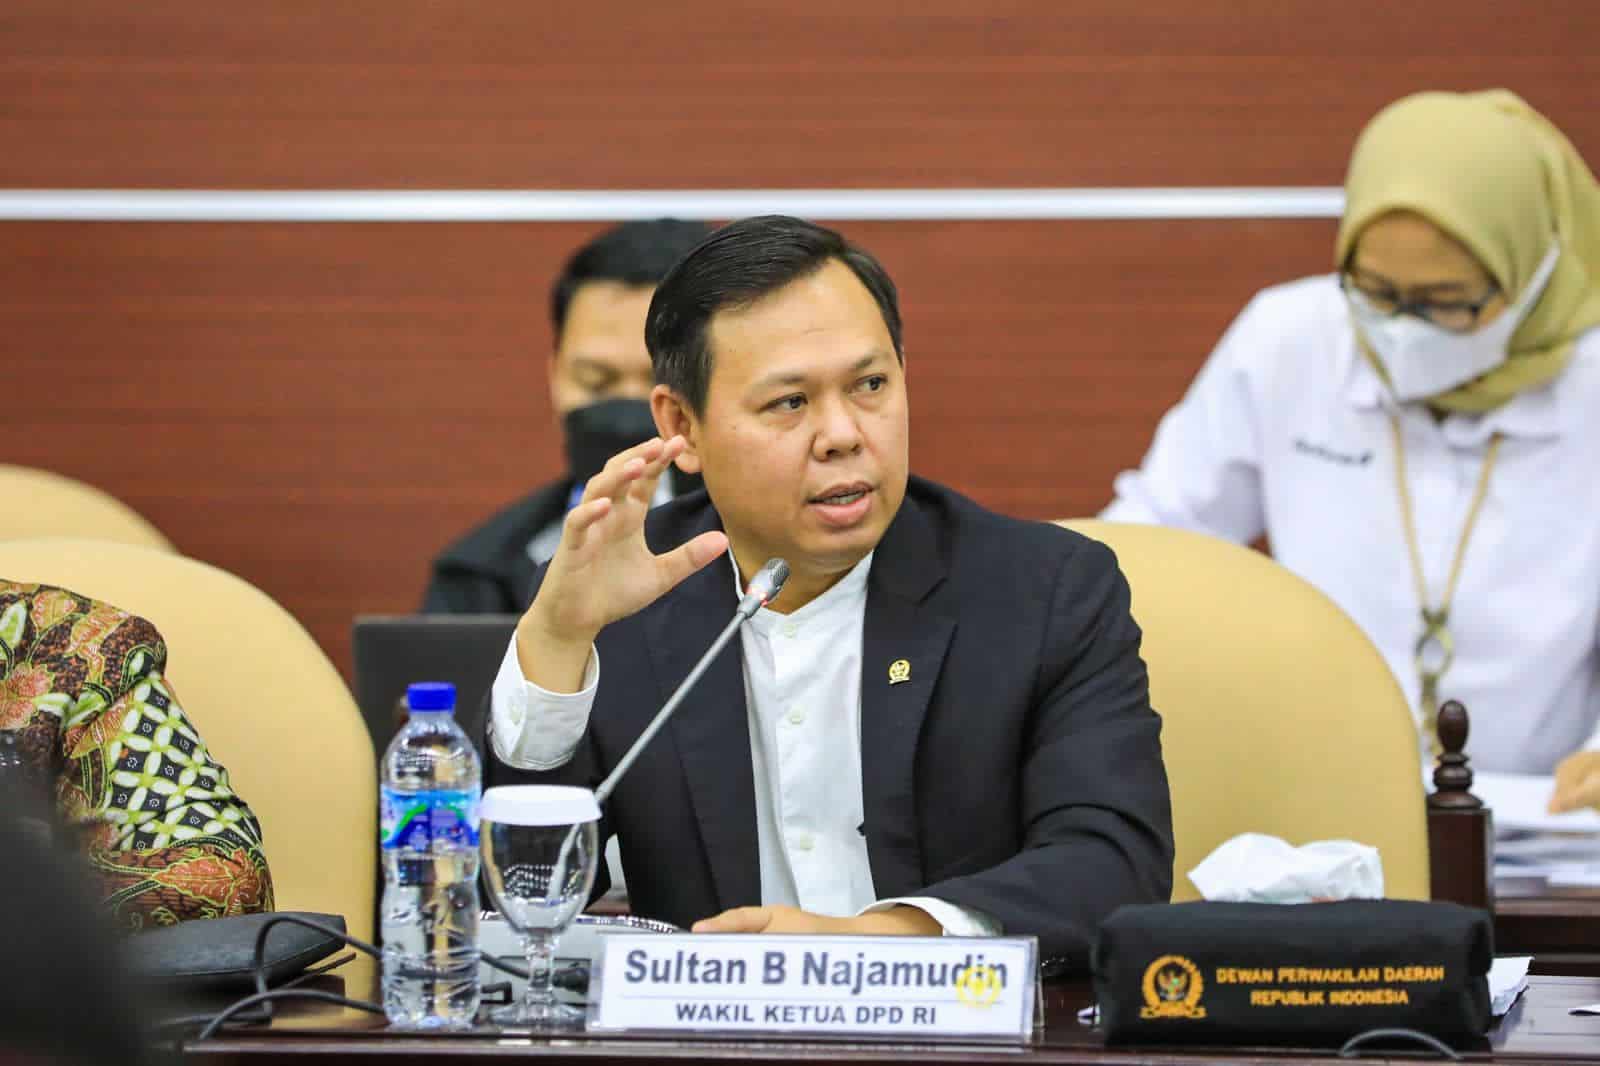 Wakil ketua Dewan Perwakilan Daerah (DPD), Sultan B Najamudin. Foto: istimewa